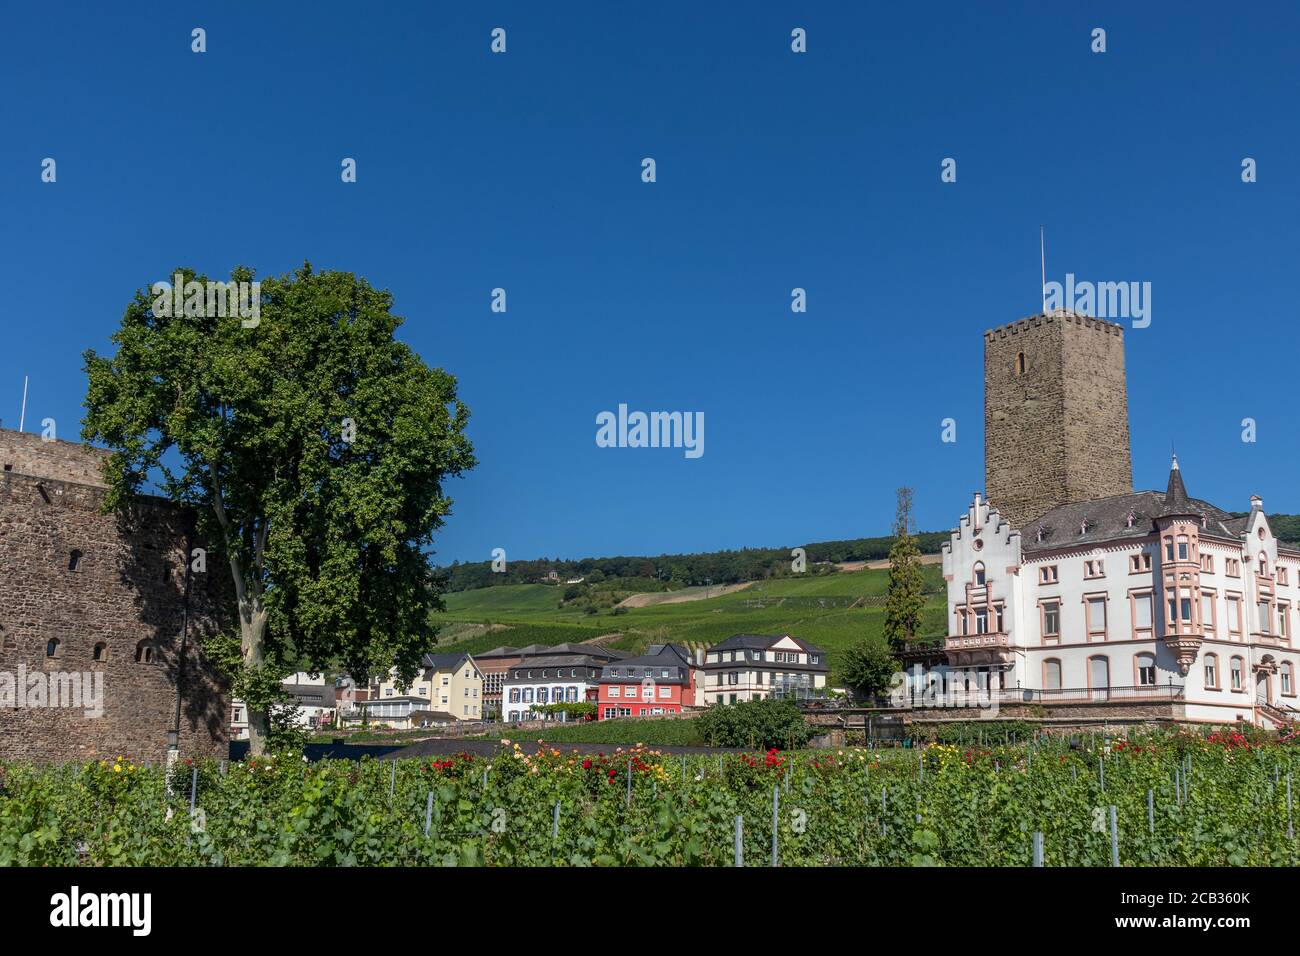 Brömserburg and Boosenburg, two castles in Rüdesheim am Rhein, wine making town in Hesse, Germany Stock Photo